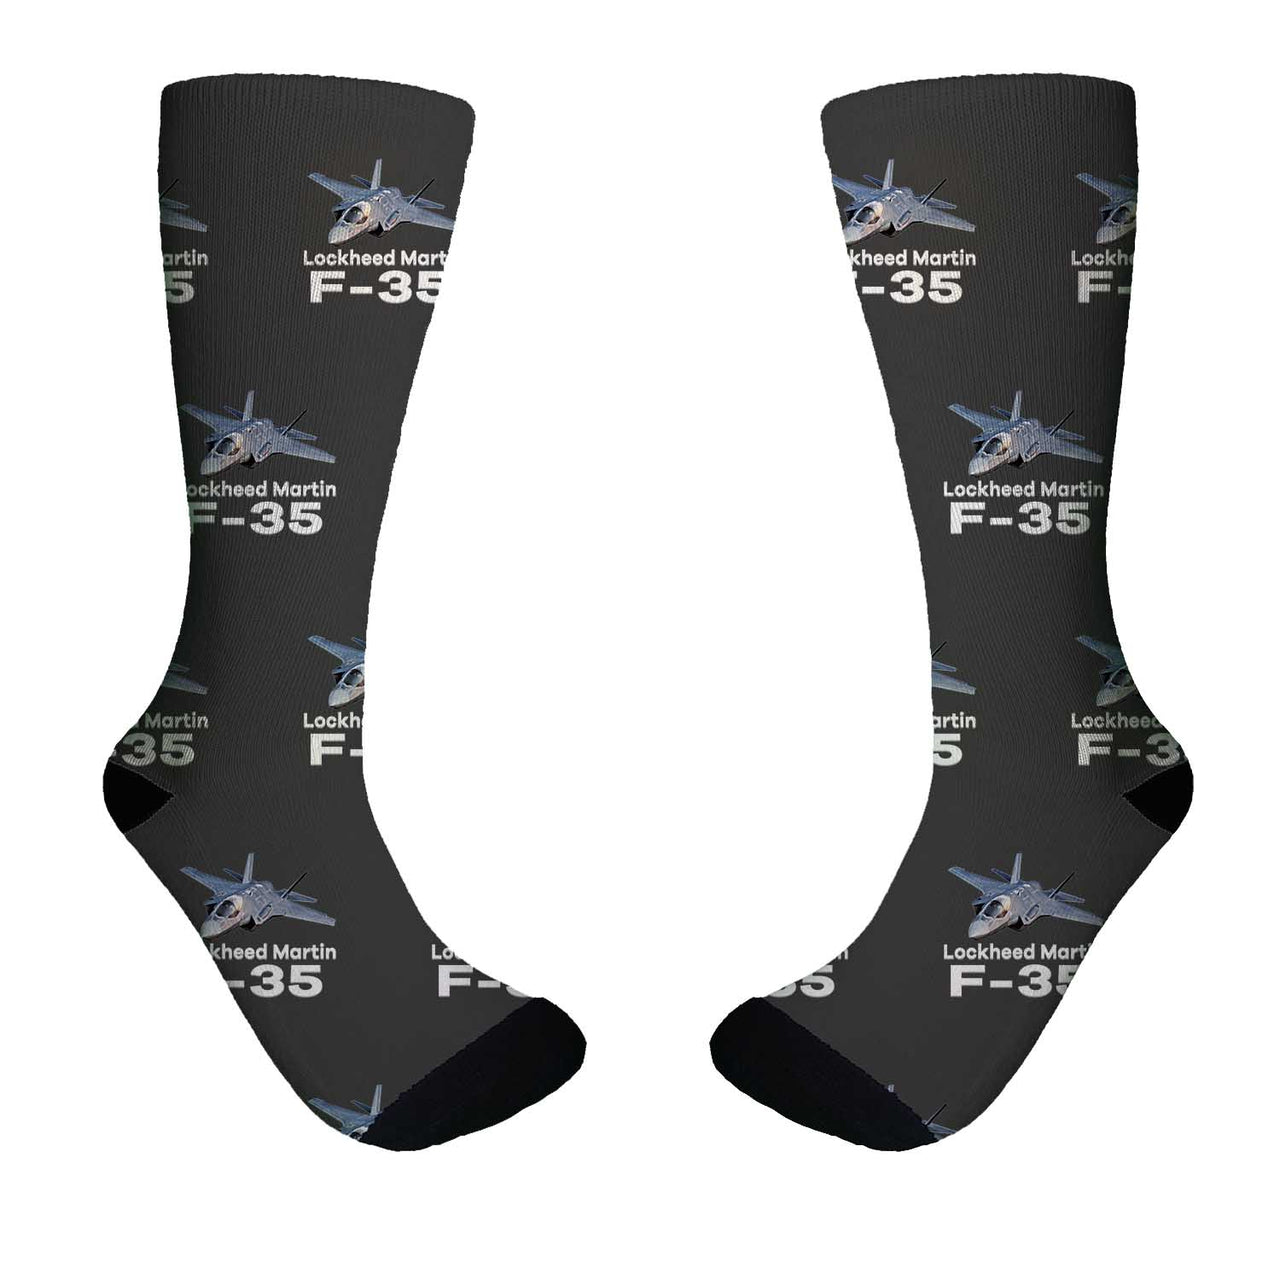 The Lockheed Martin F35 Designed Socks